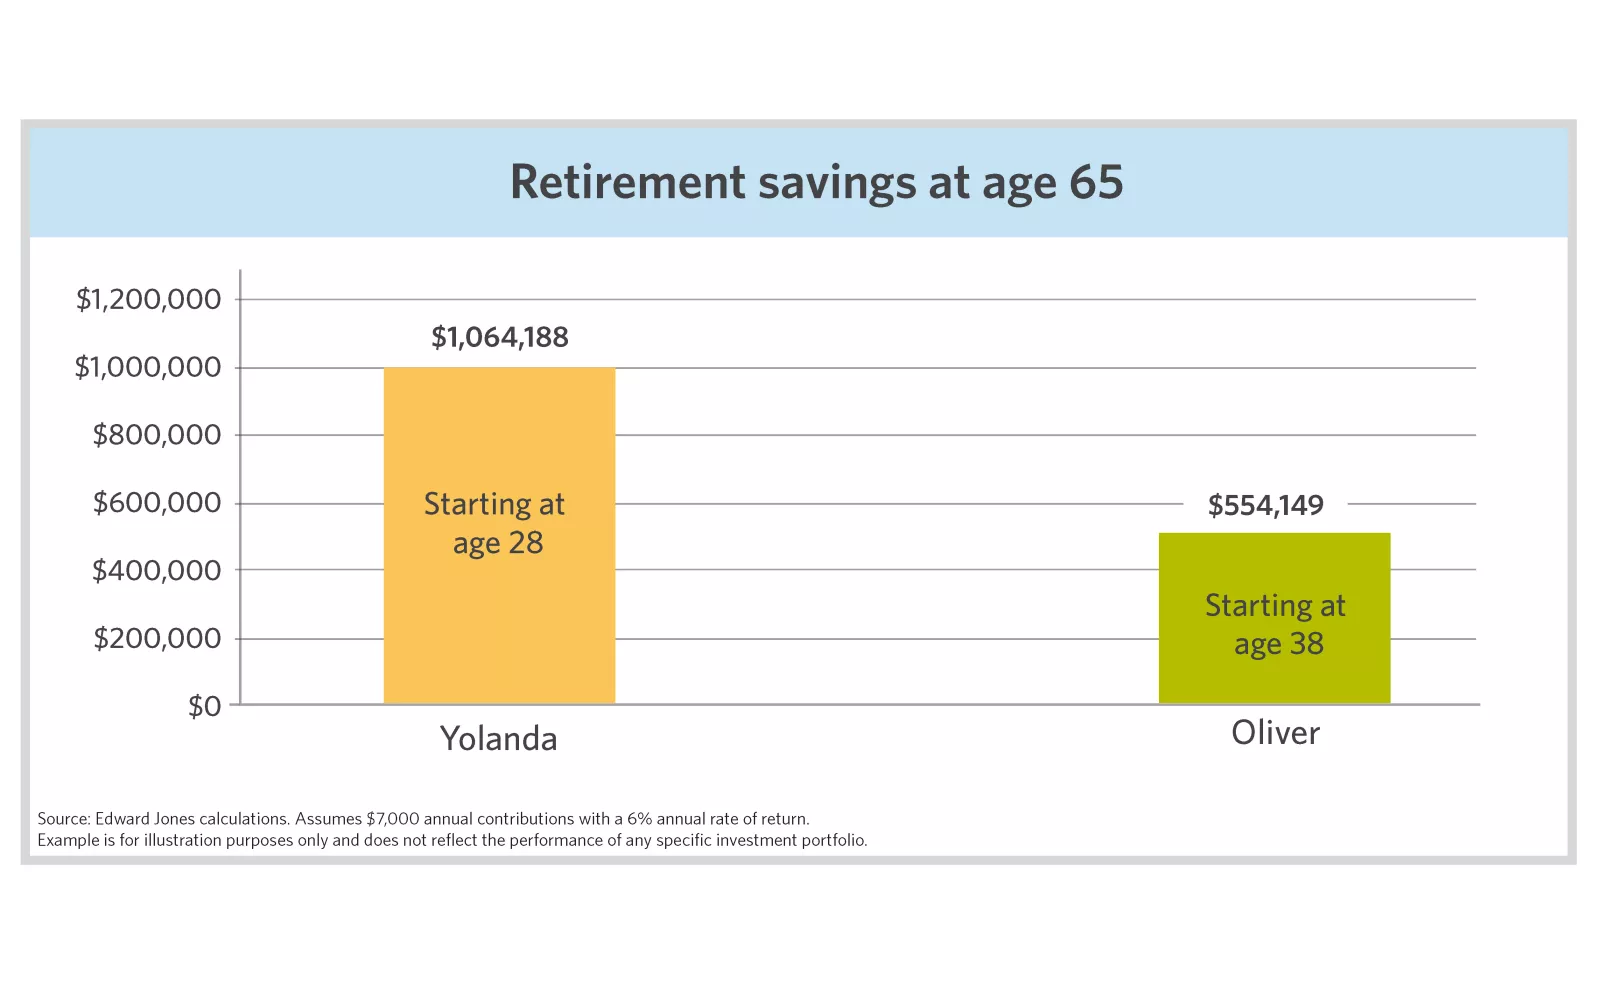  retirement savings at age 65
